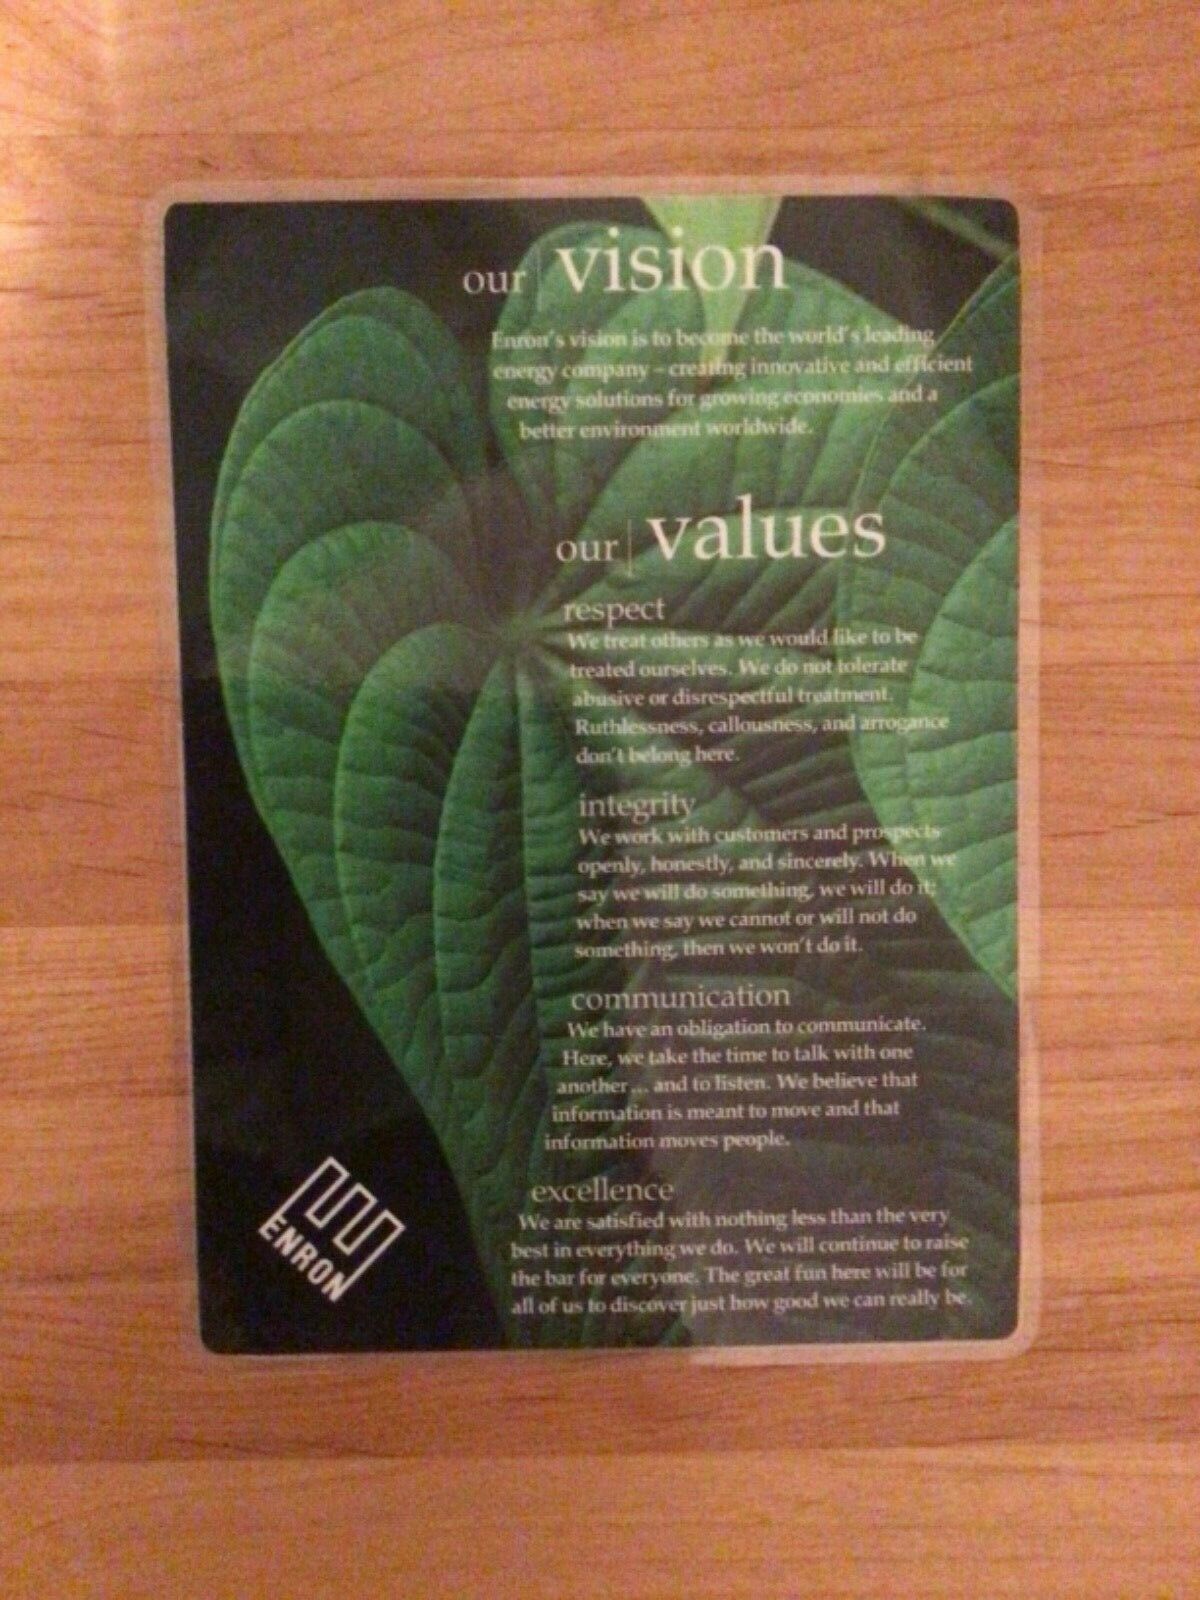 Super Rare Authentic Original Enron Vision And Values Laminated Placard!